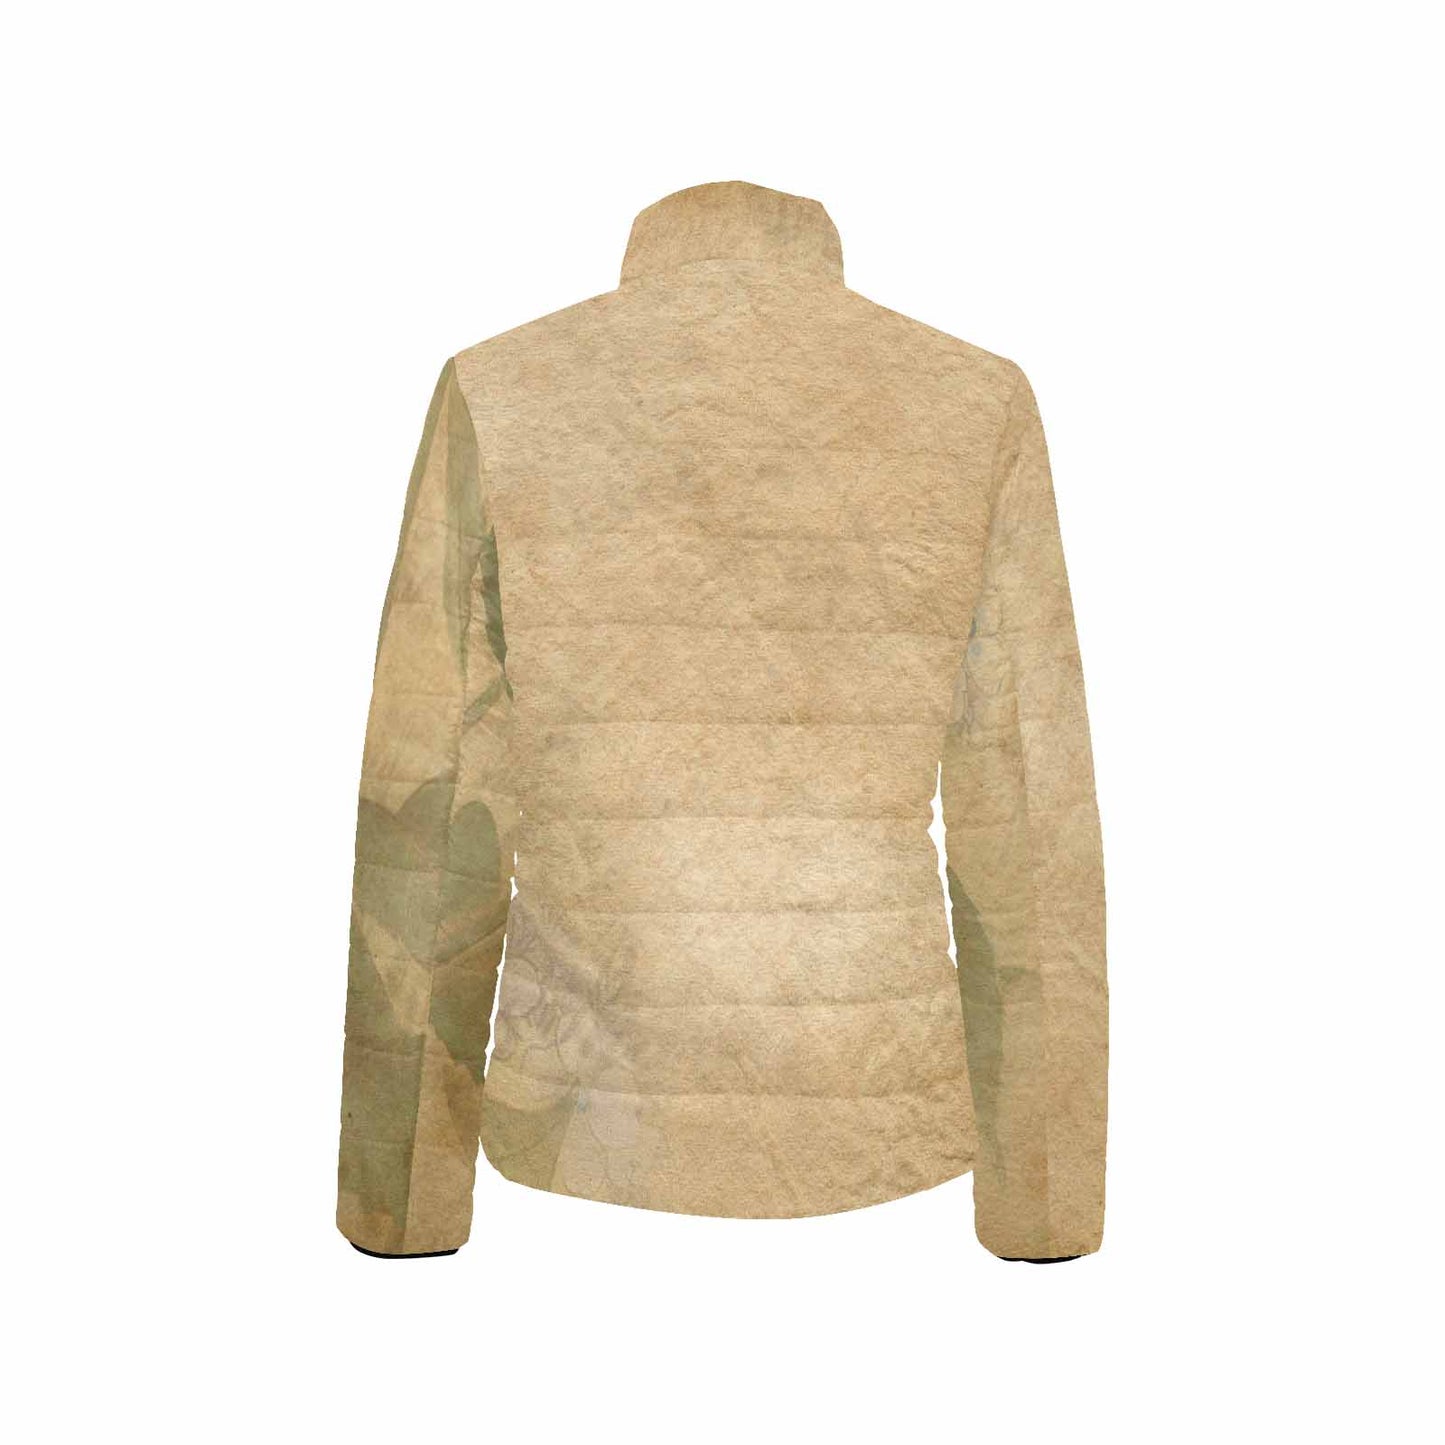 Antique general print quilted jacket, design 28